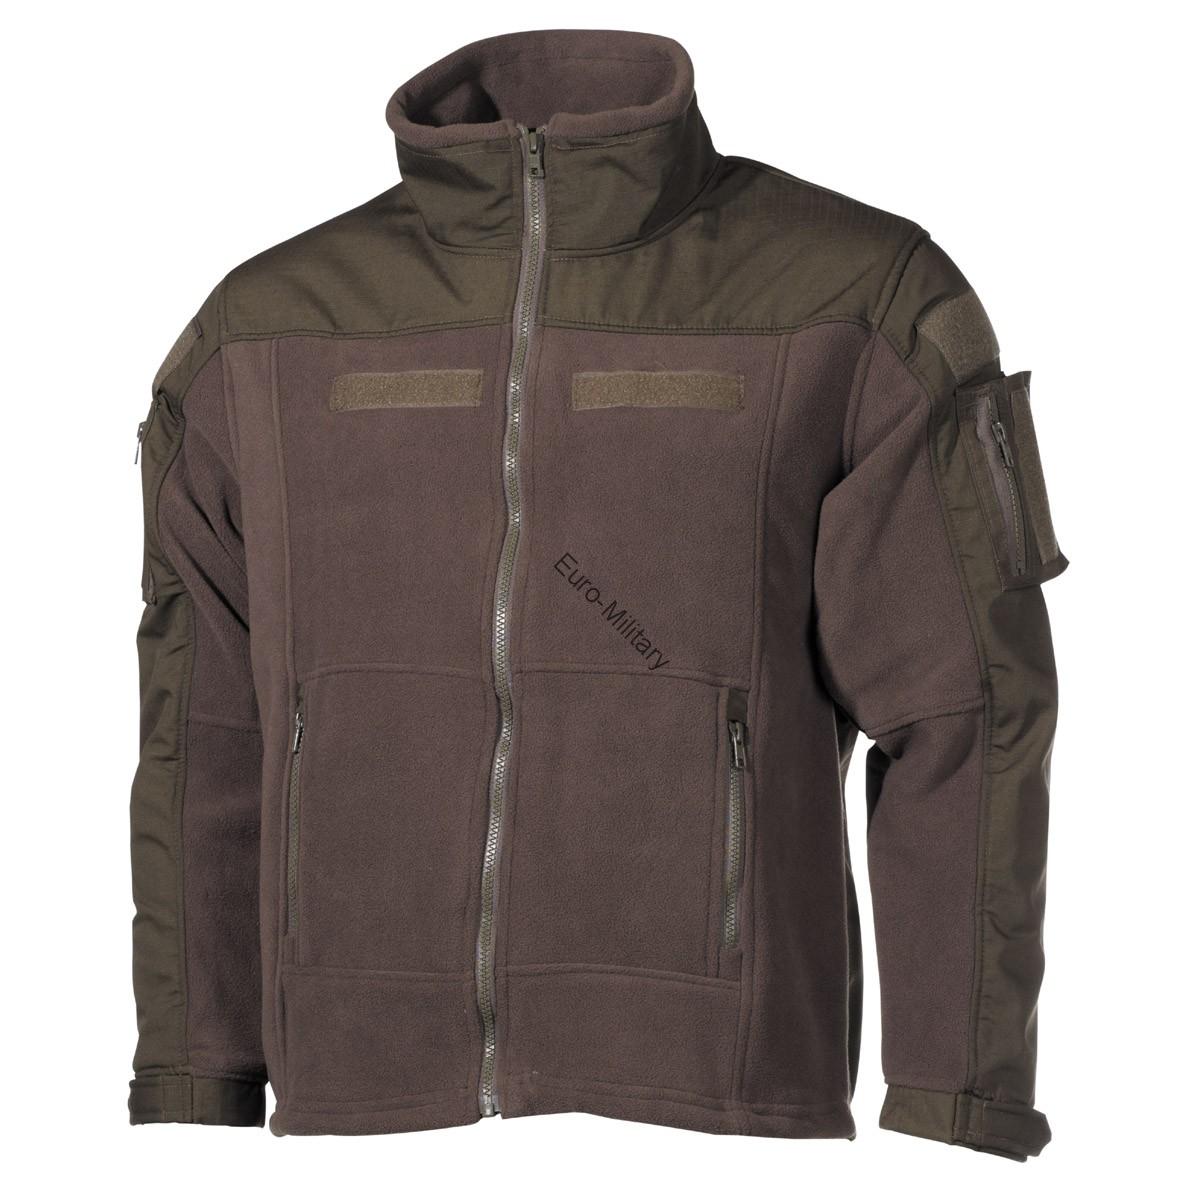 Professional Tactical Military Fleece Jacket COMBAT High Defense - OD Green